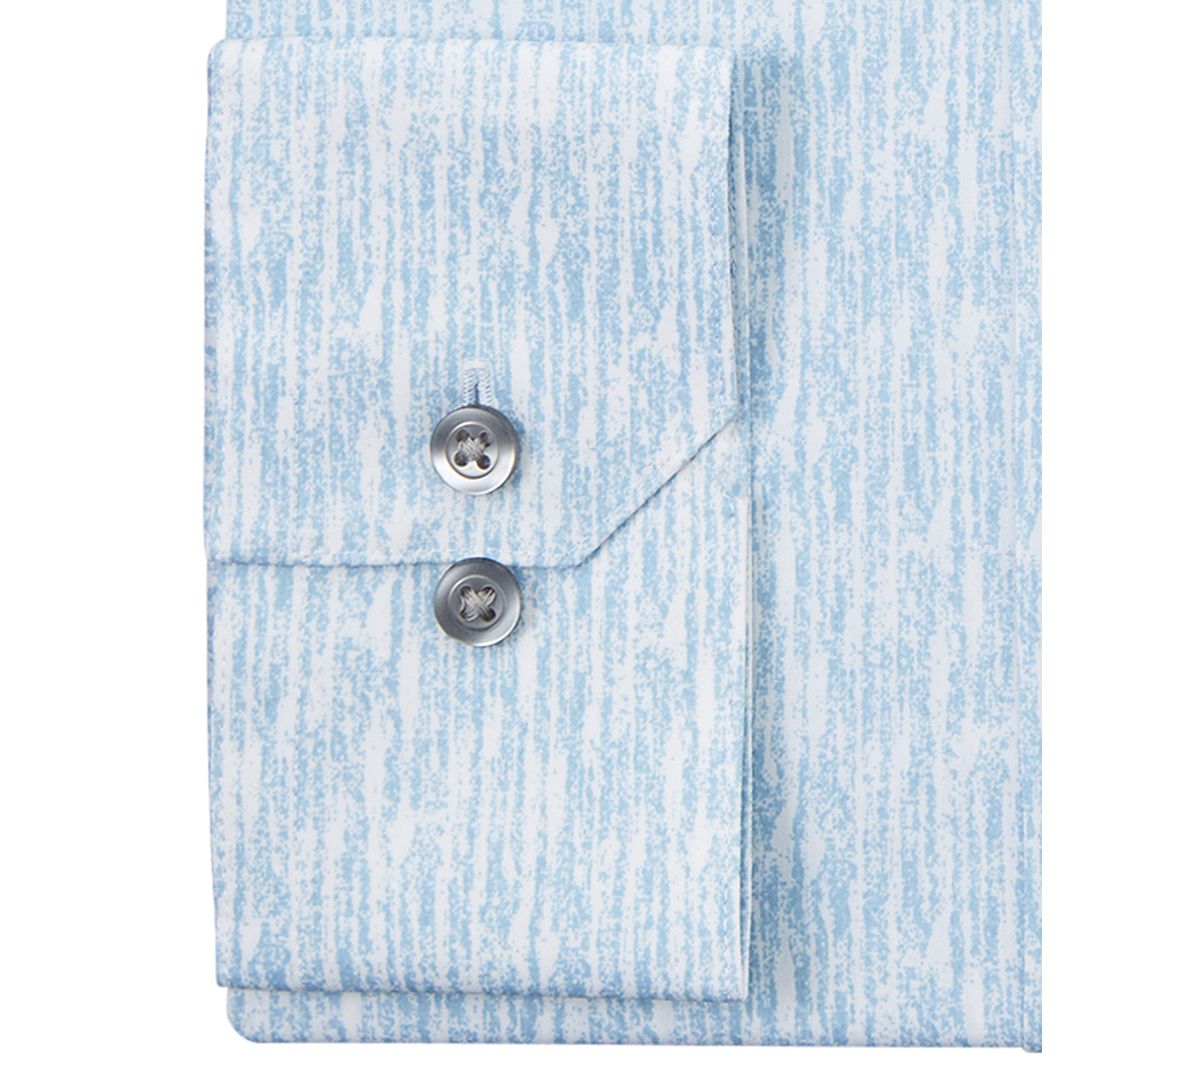 Alfani Slim-fit Performance Stretch Texture-print Dress Shirt Lt Blue White